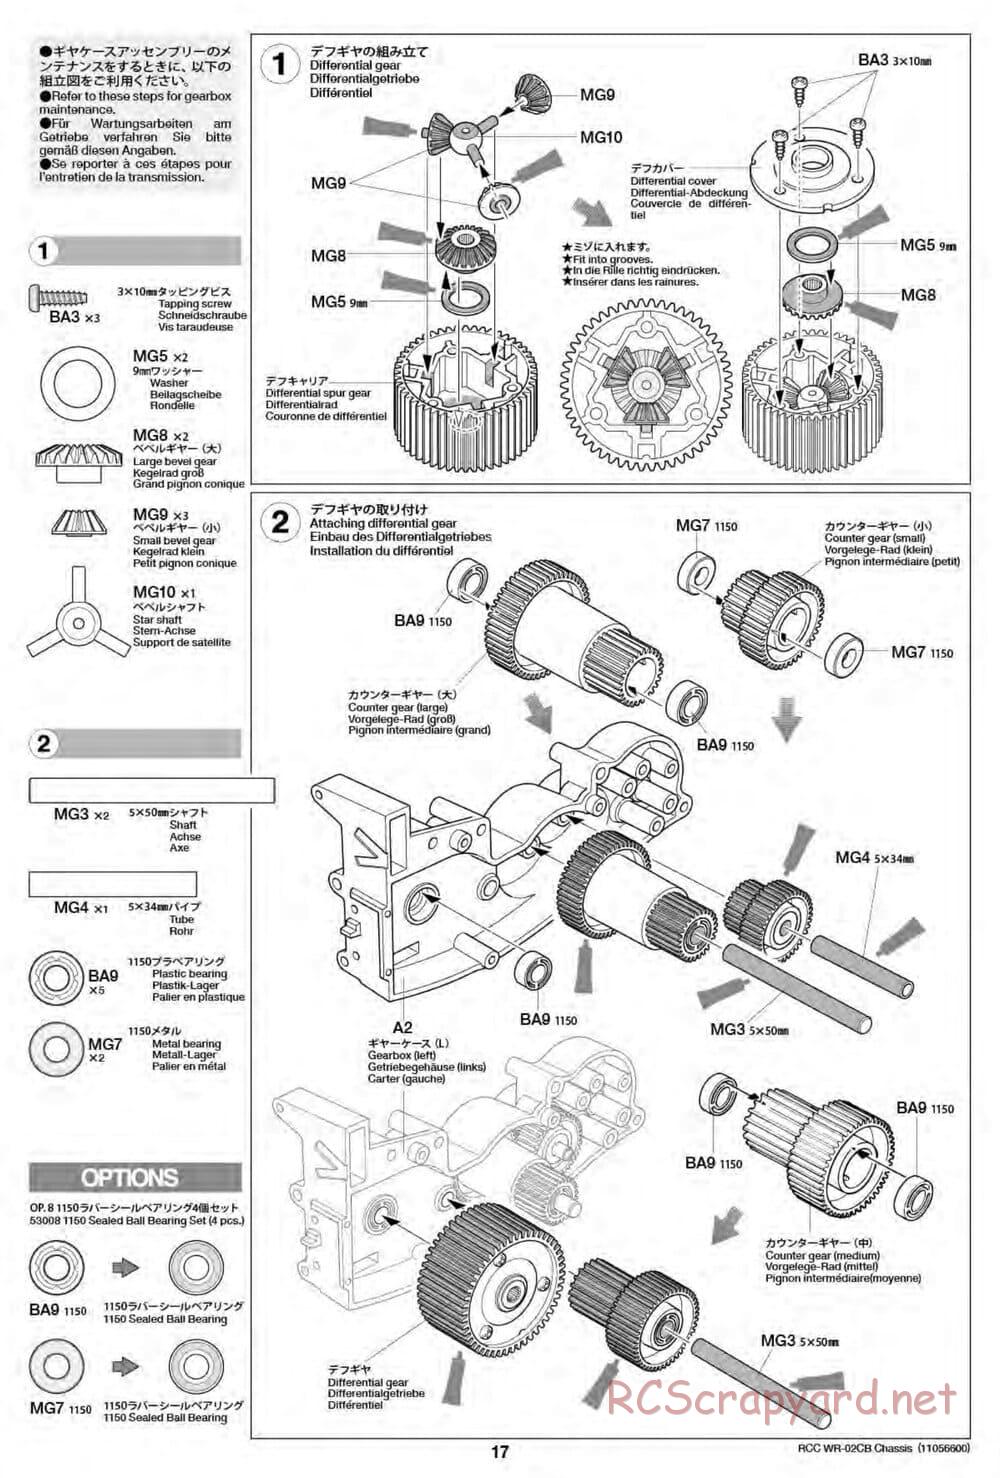 Tamiya - WR-02CB Chassis - Manual - Page 17